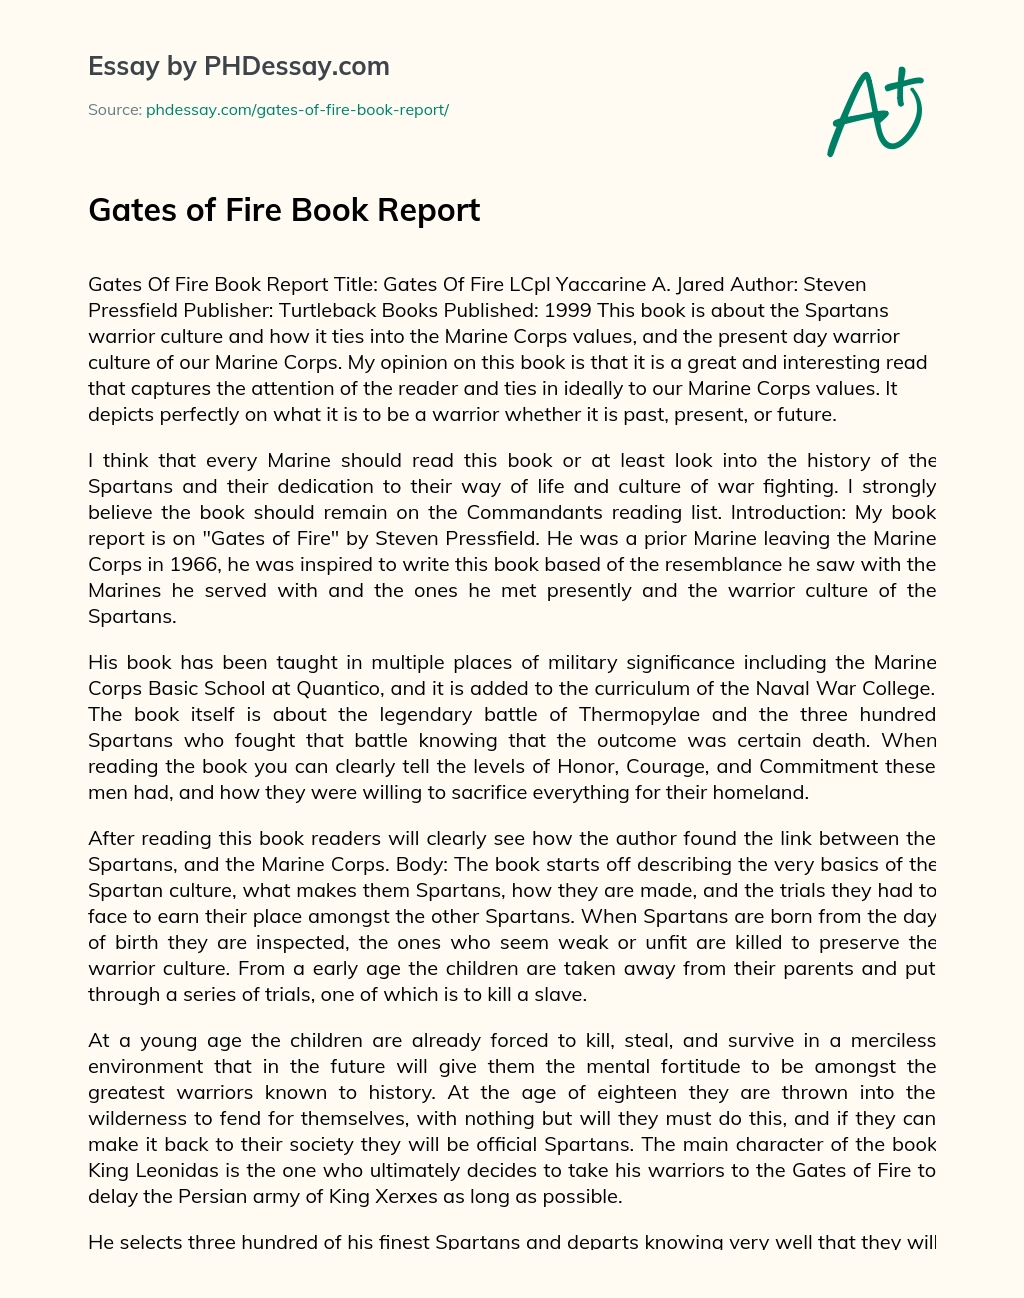 Gates of Fire Book Report essay